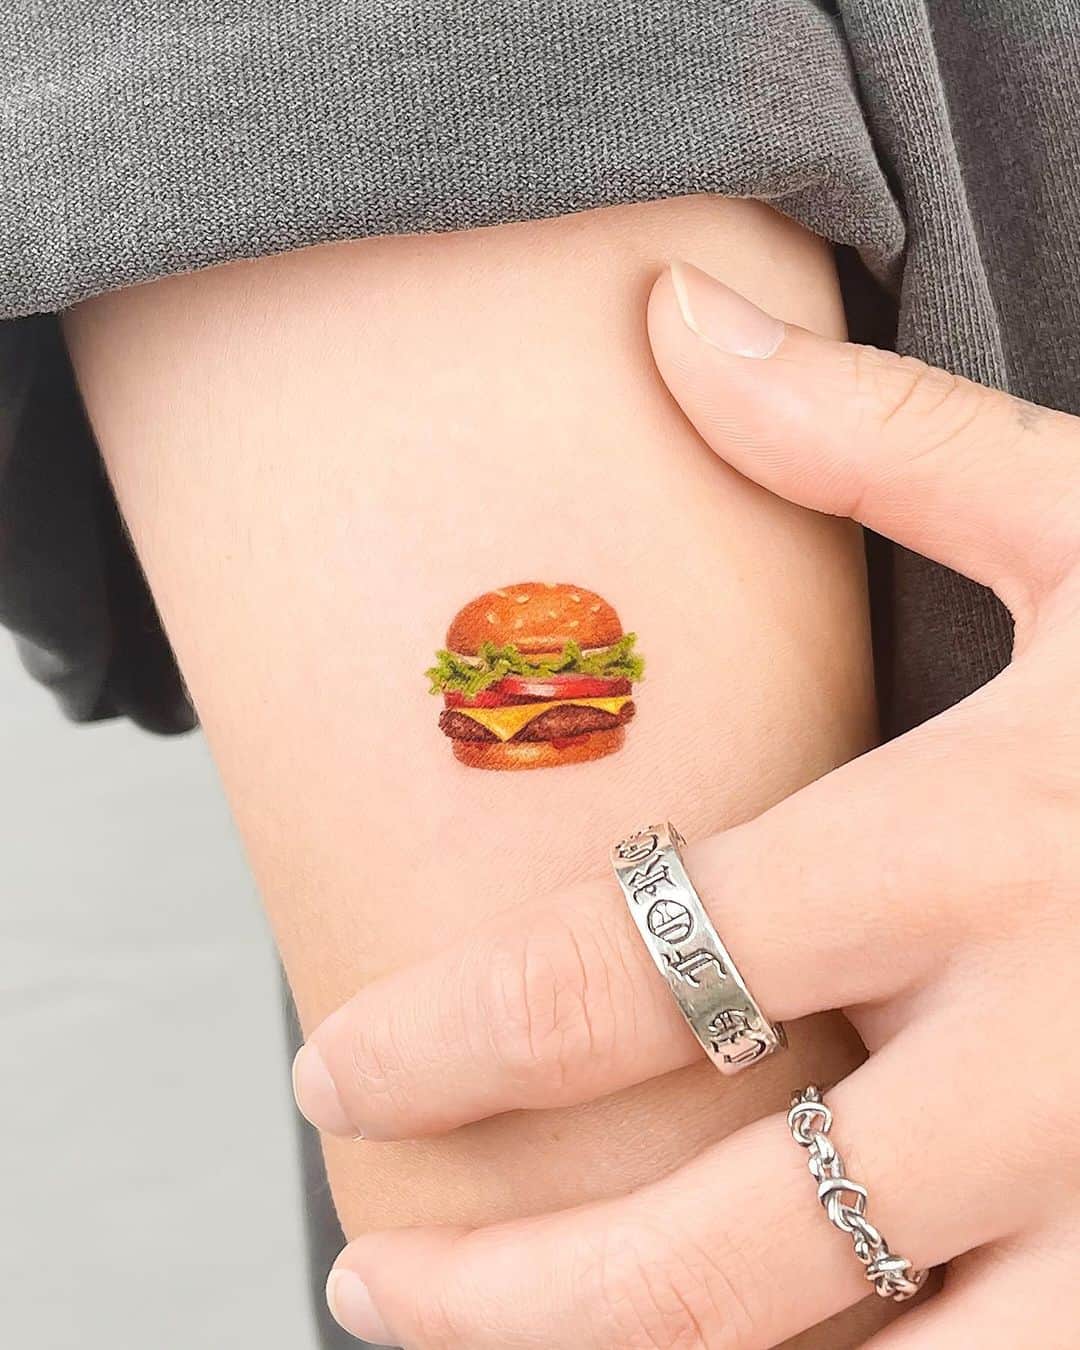 Burger tattoo by vismstudio